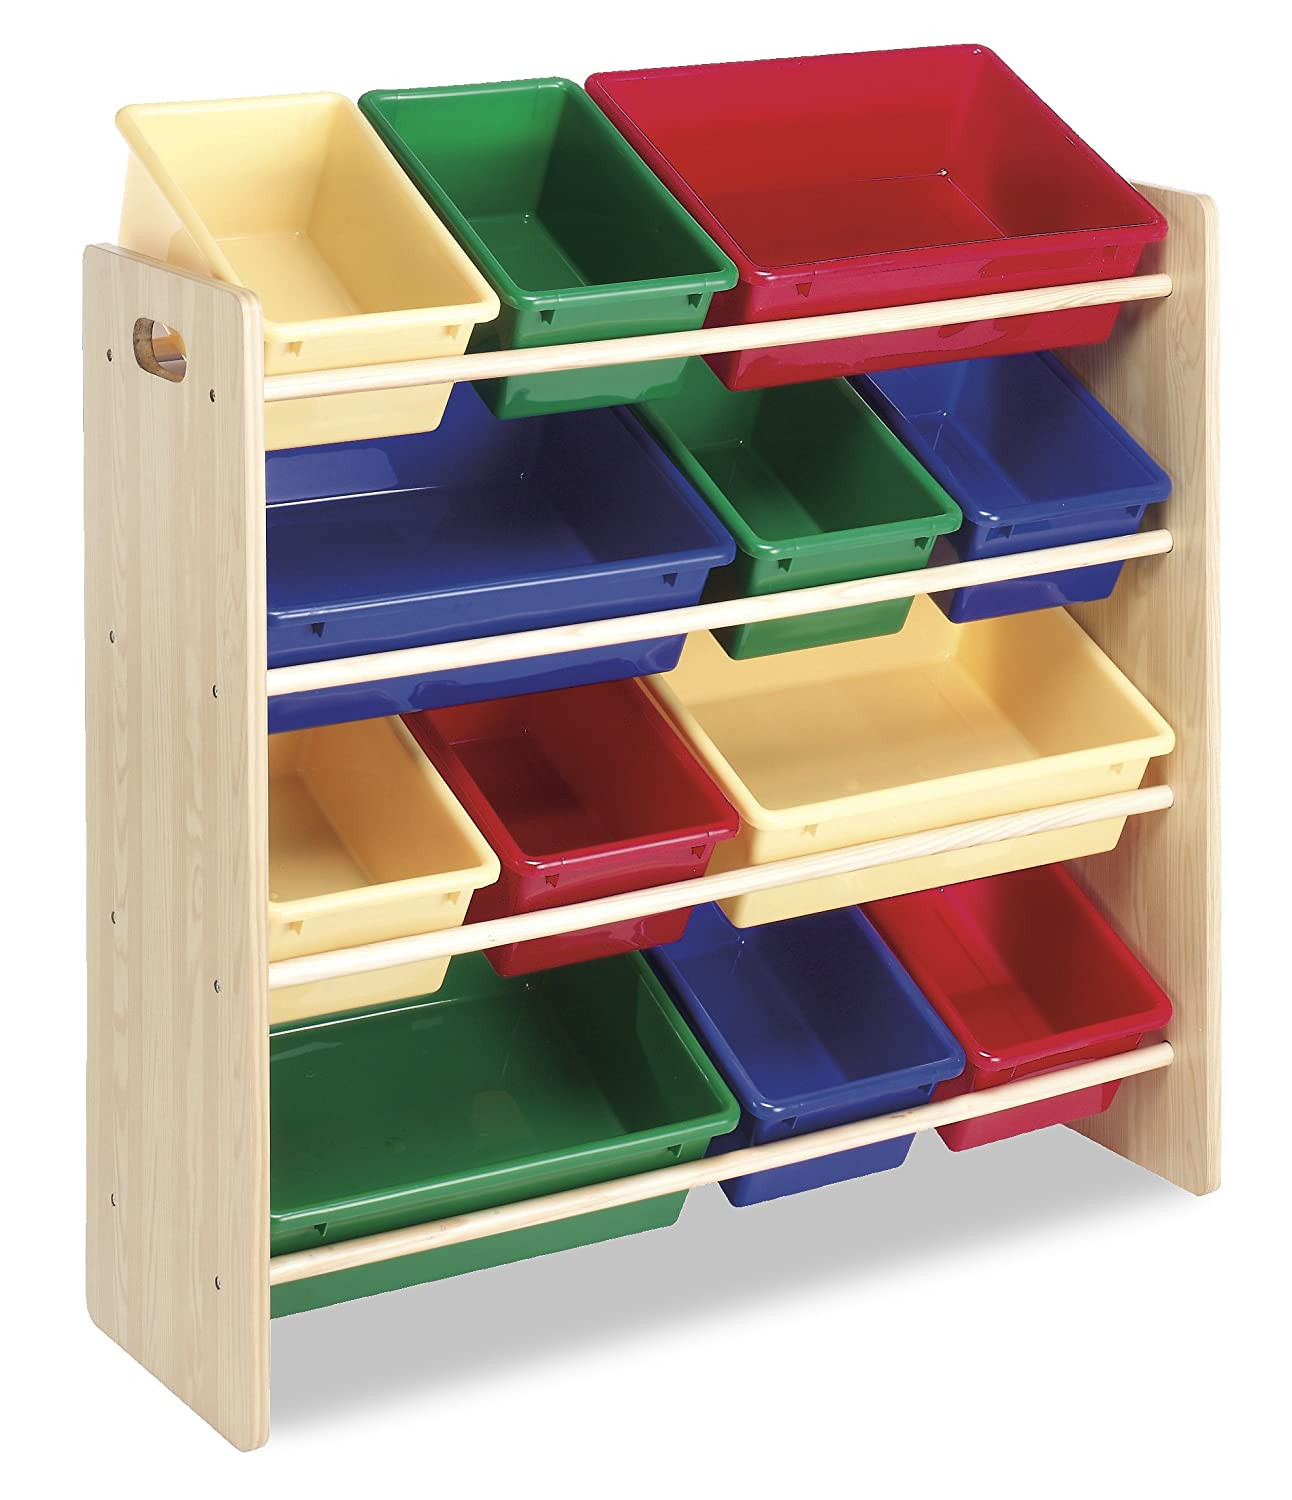 Storage Bins For Kids Room
 Organizing Kids Toys & Rooms Organization Challenge Day 13